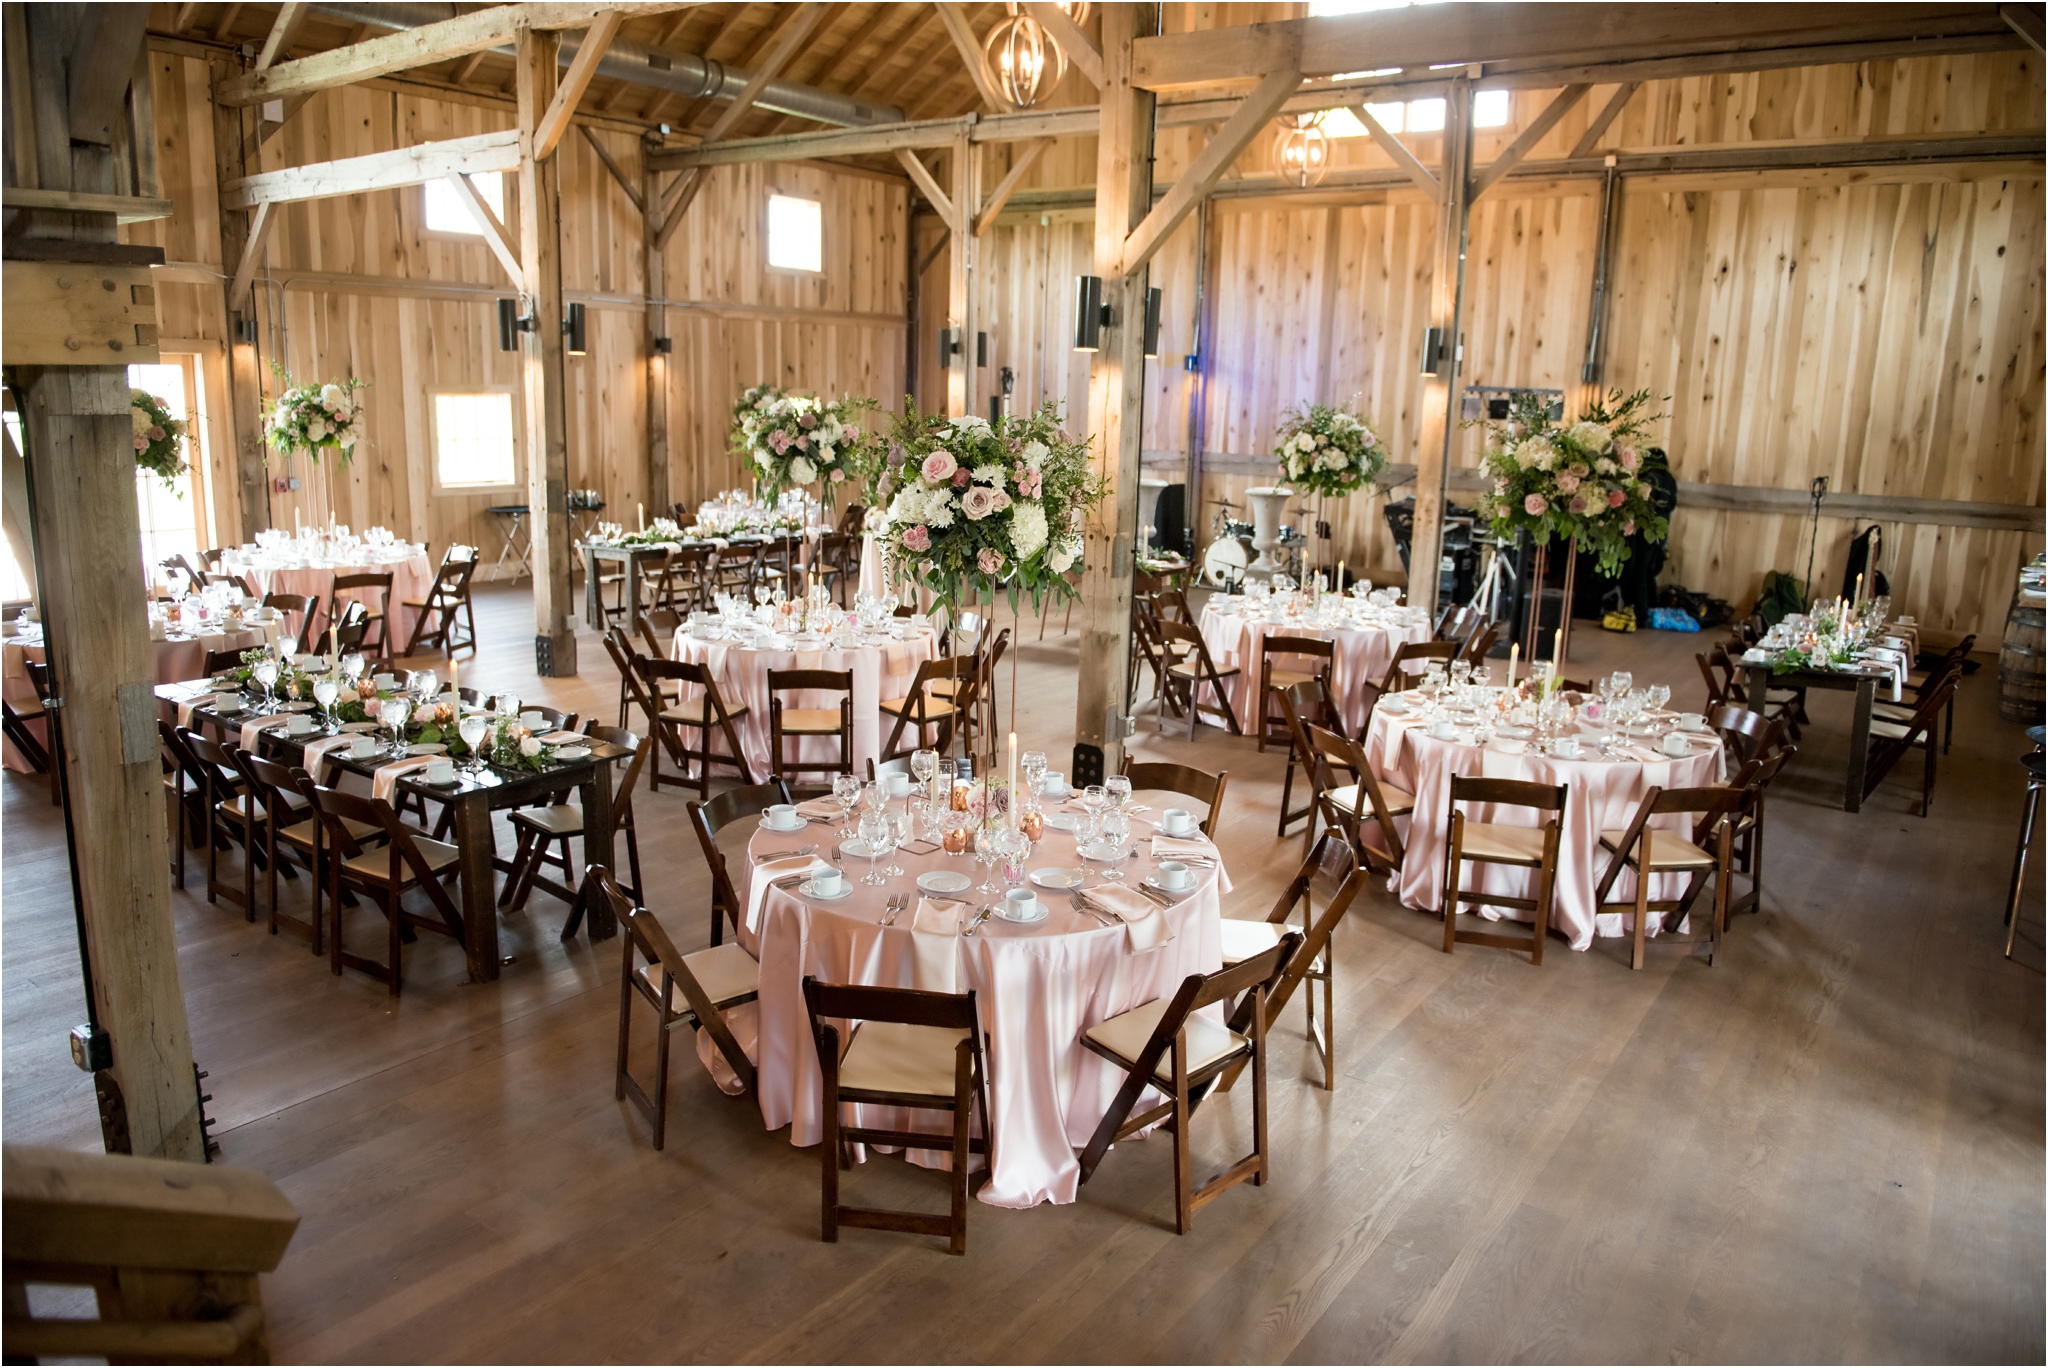 Lindley Farmstead at Chatham Hills | Sarah and Rachel Wedding Photographers | Westfield, Indiana wedding | elsie's flower shoppe barn wedding florals